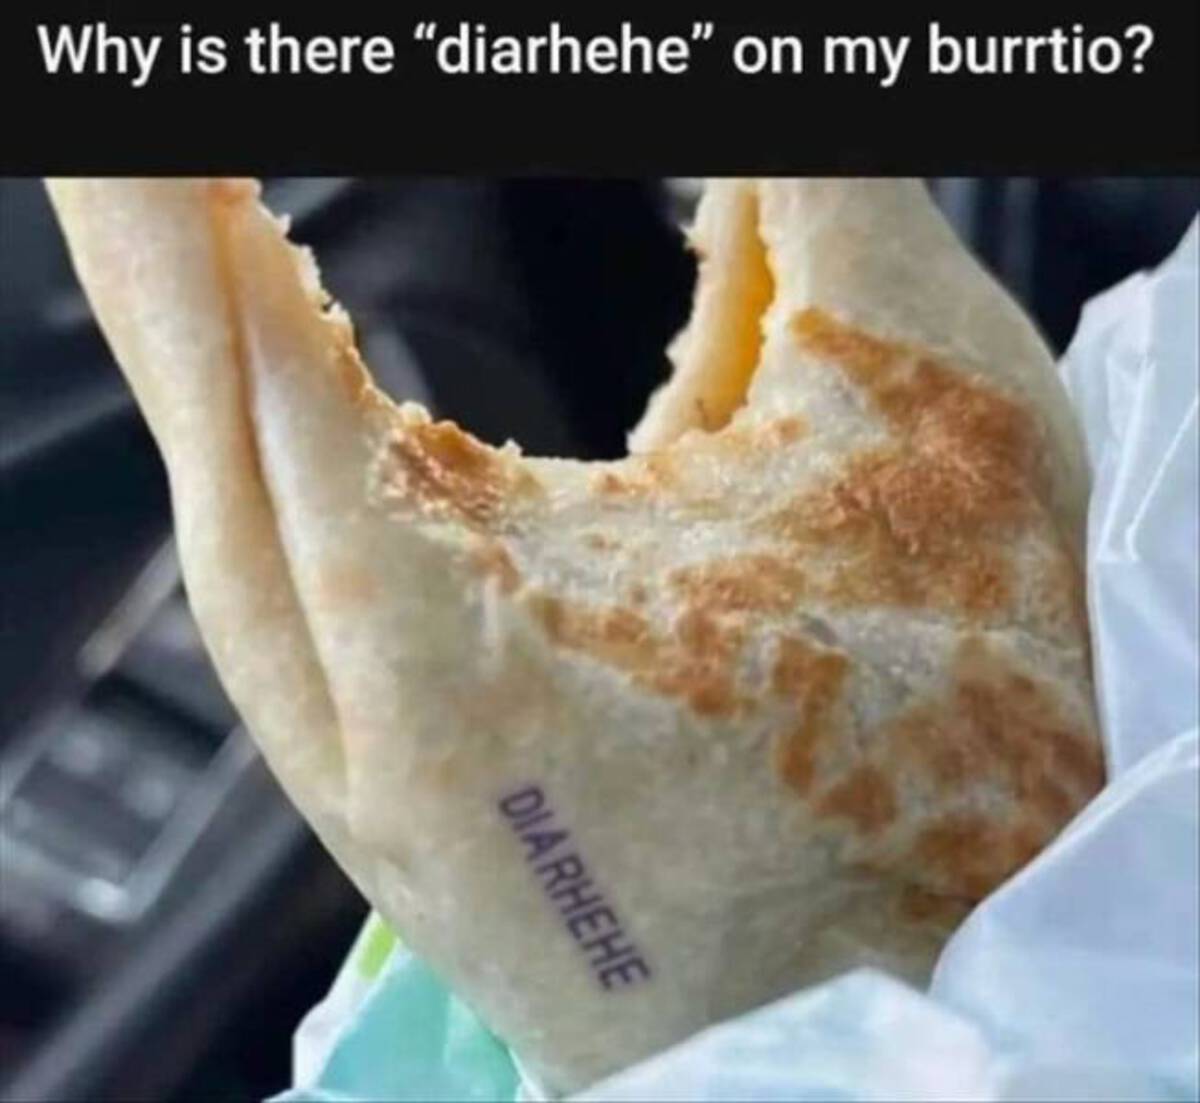 taco bell emems - Why is there "diarhehe" on my burrtio? Diarhehe